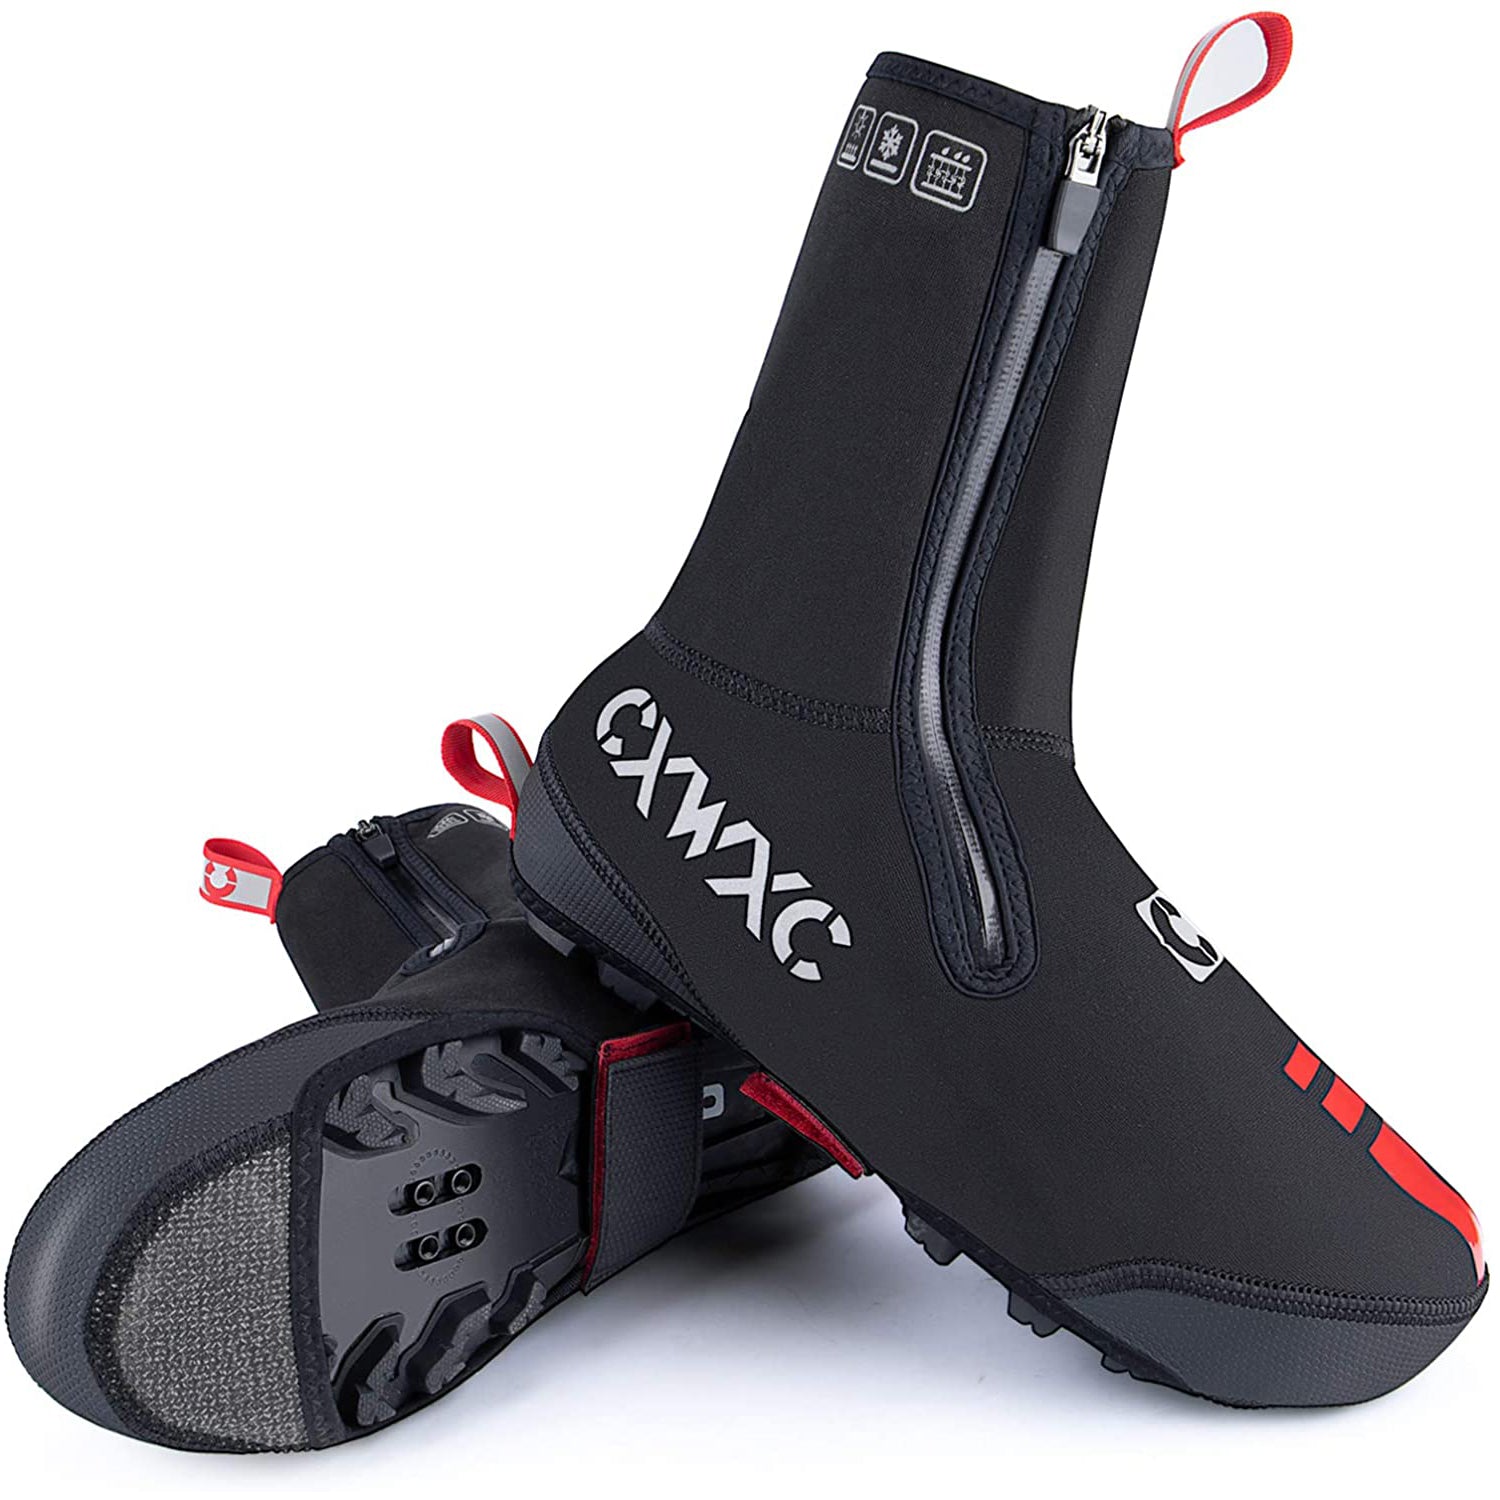 CXWXC Cycling Shoe Covers Neoprene Waterproof,Winter Thermal Warm Full Bicycle Overshoes for Men Women,Road Mountain Bike Booties